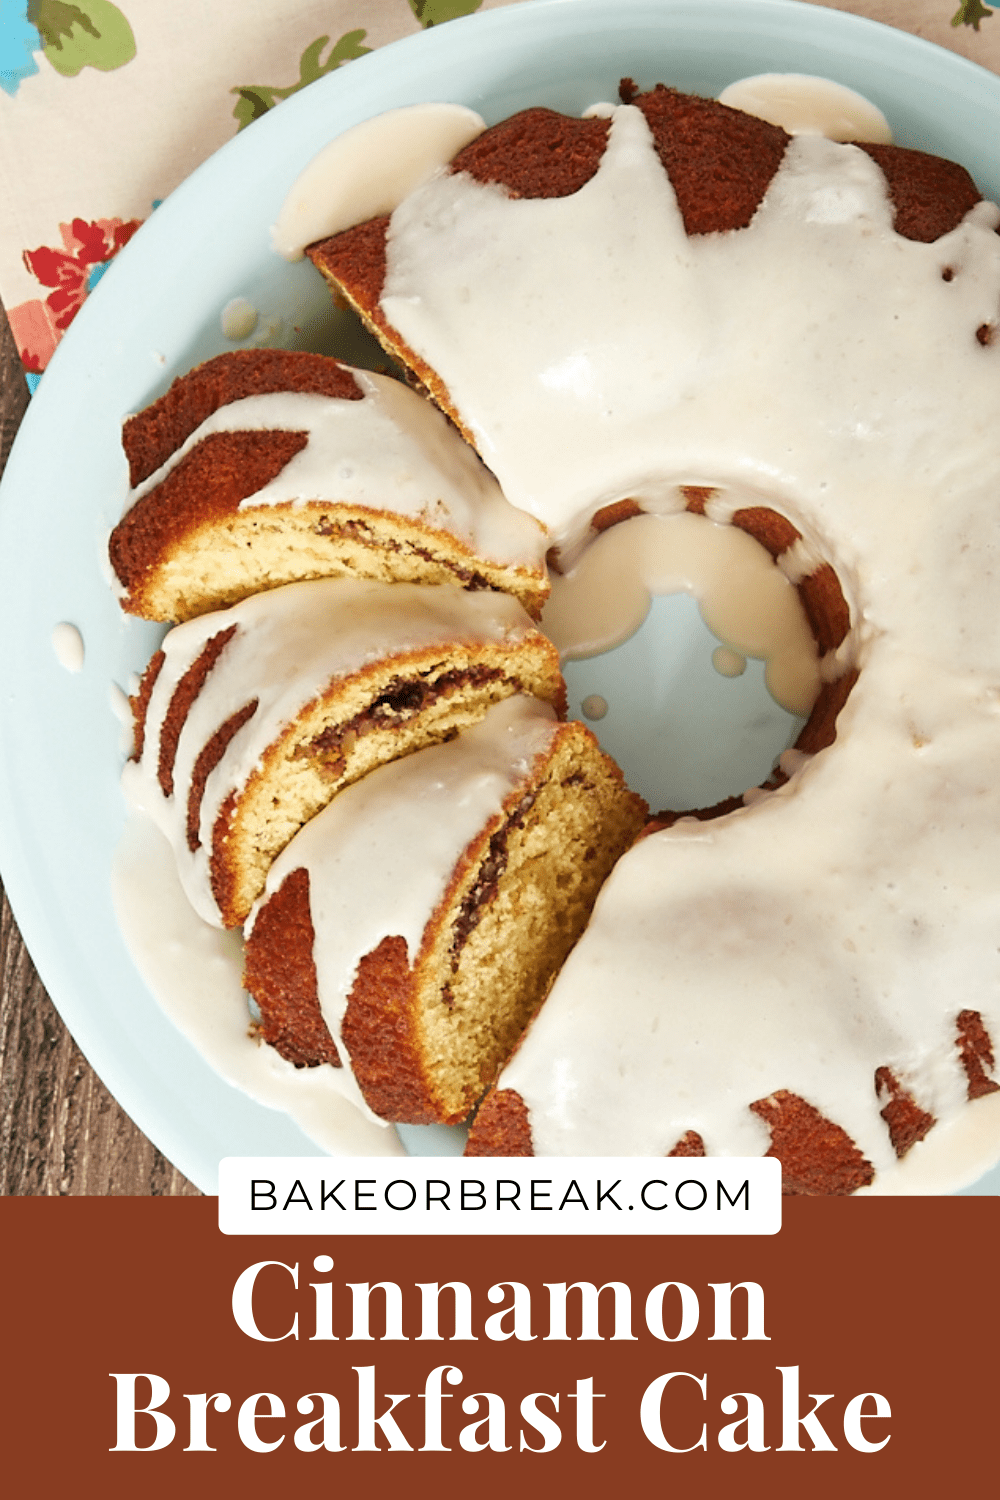 Cinnamon Breakfast Cake bakeorbreak.com